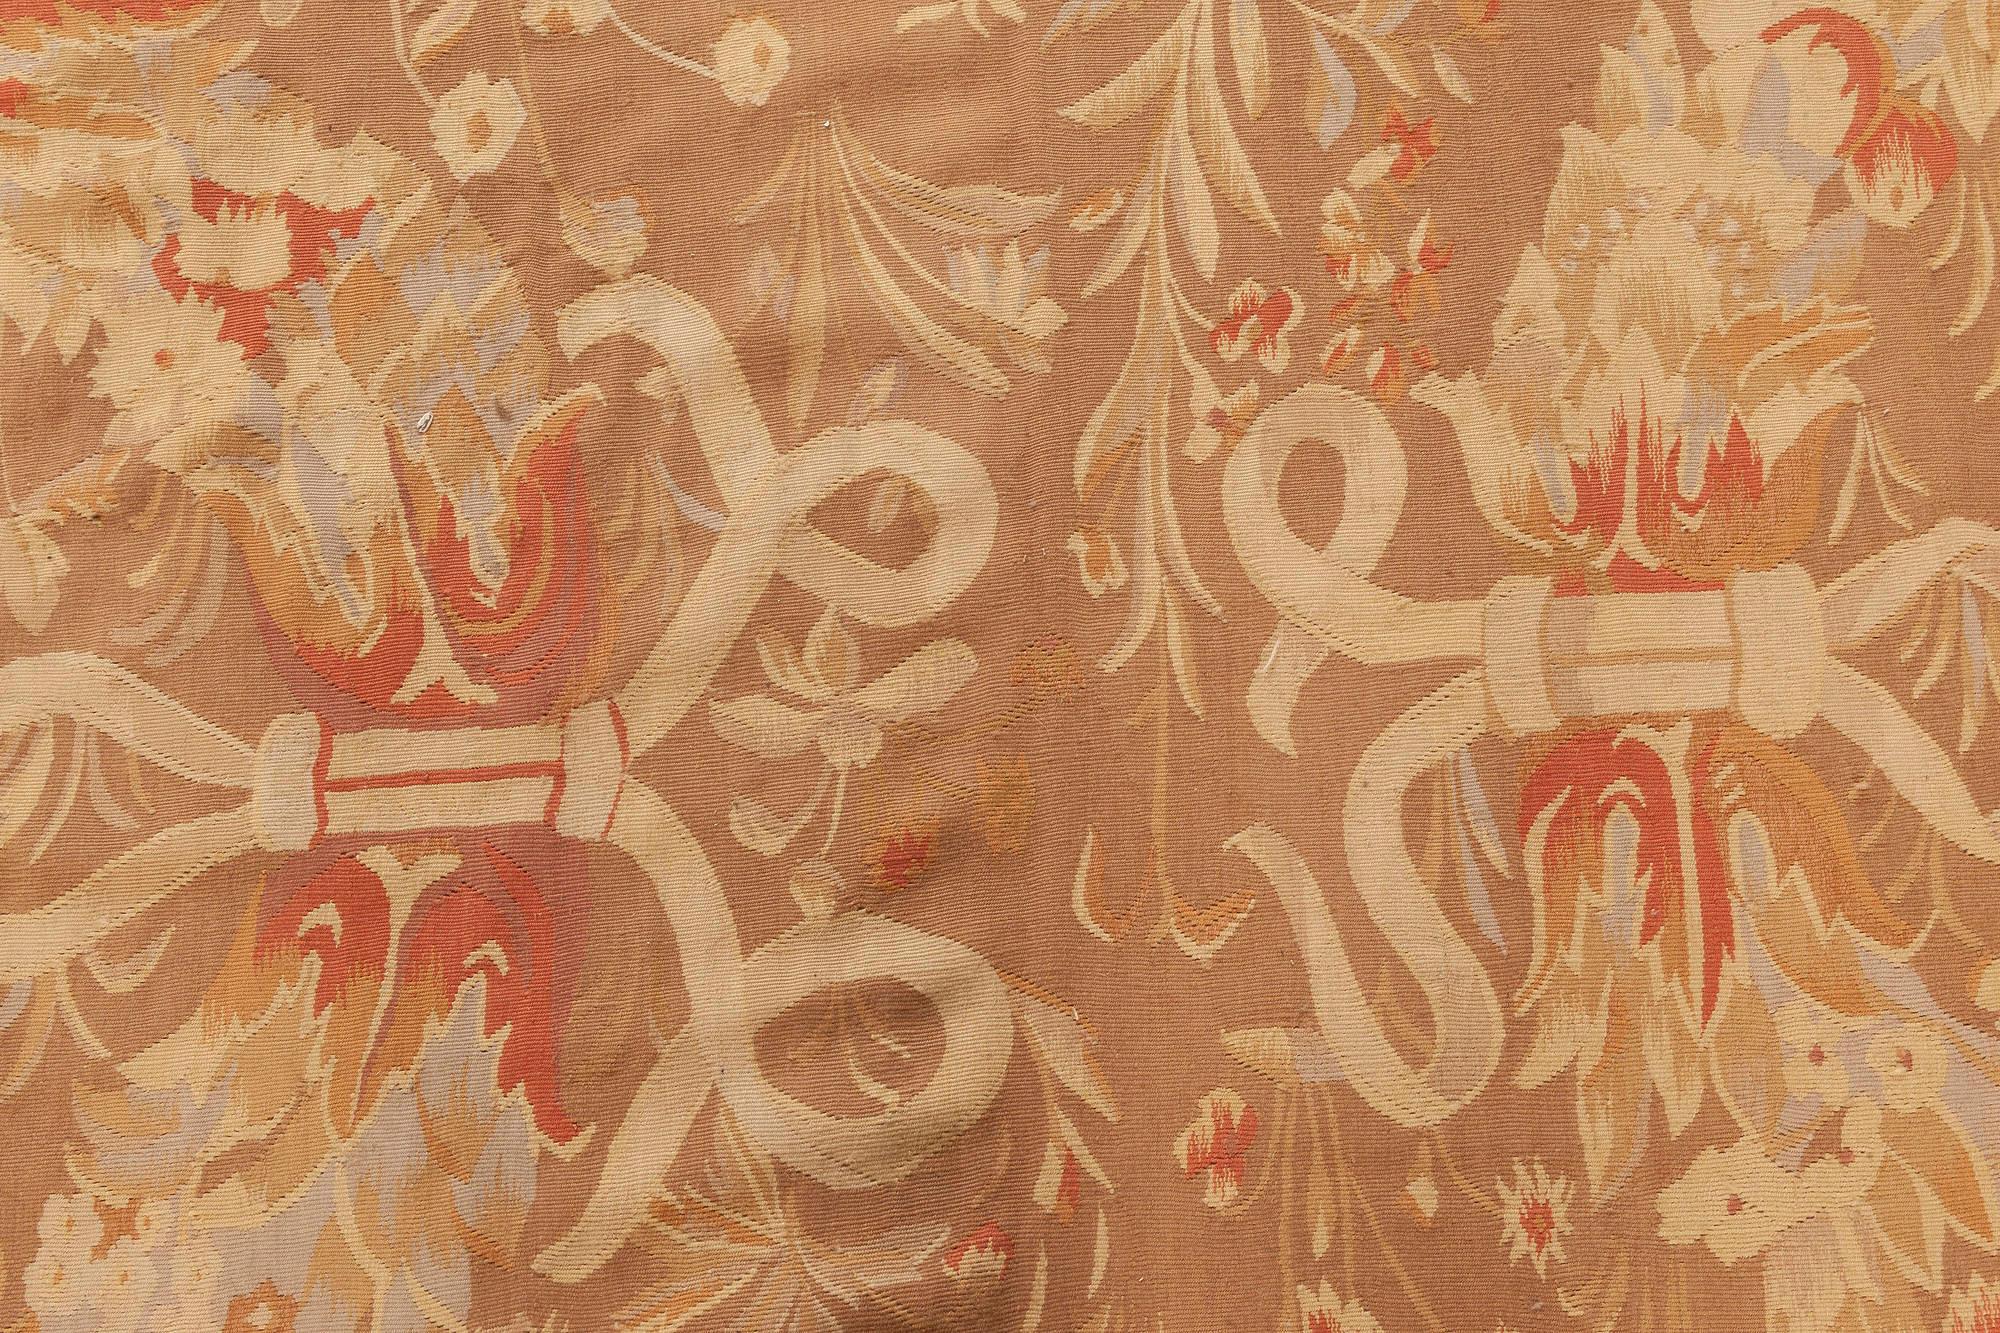 Contempoarary Bessarabian inspired beige, brown, purple, red rug by Doris Leslie Blau
Size: 11'10